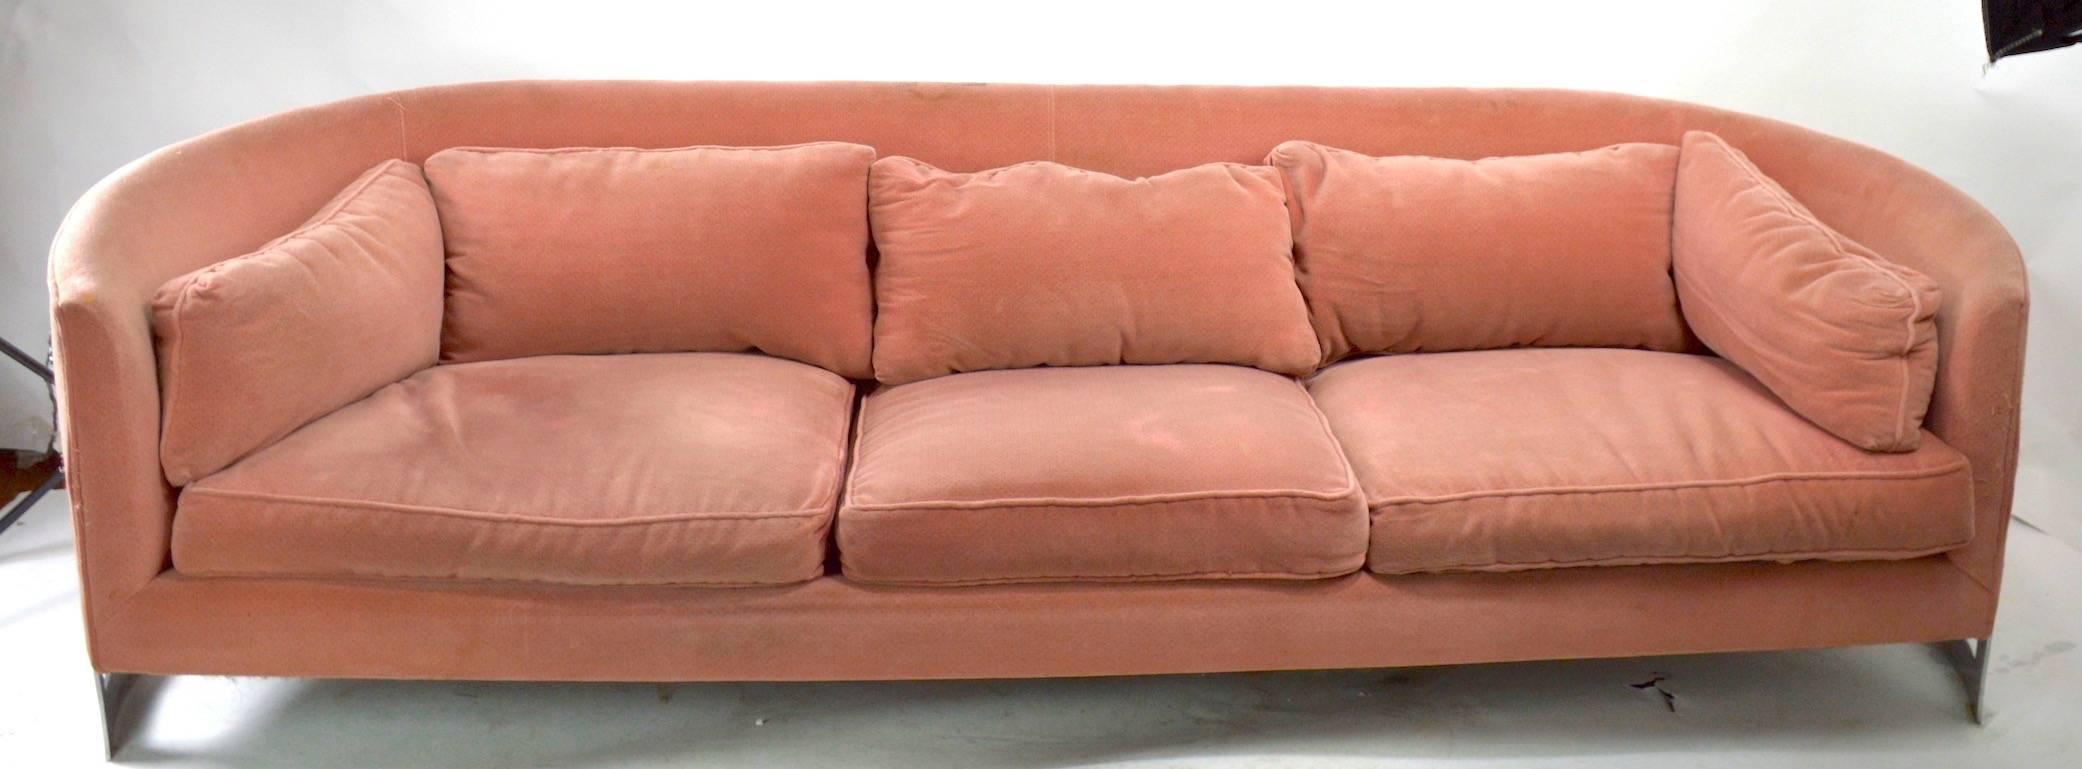 20th Century Chrome Strap Sofa Attributed to Milo Baughman